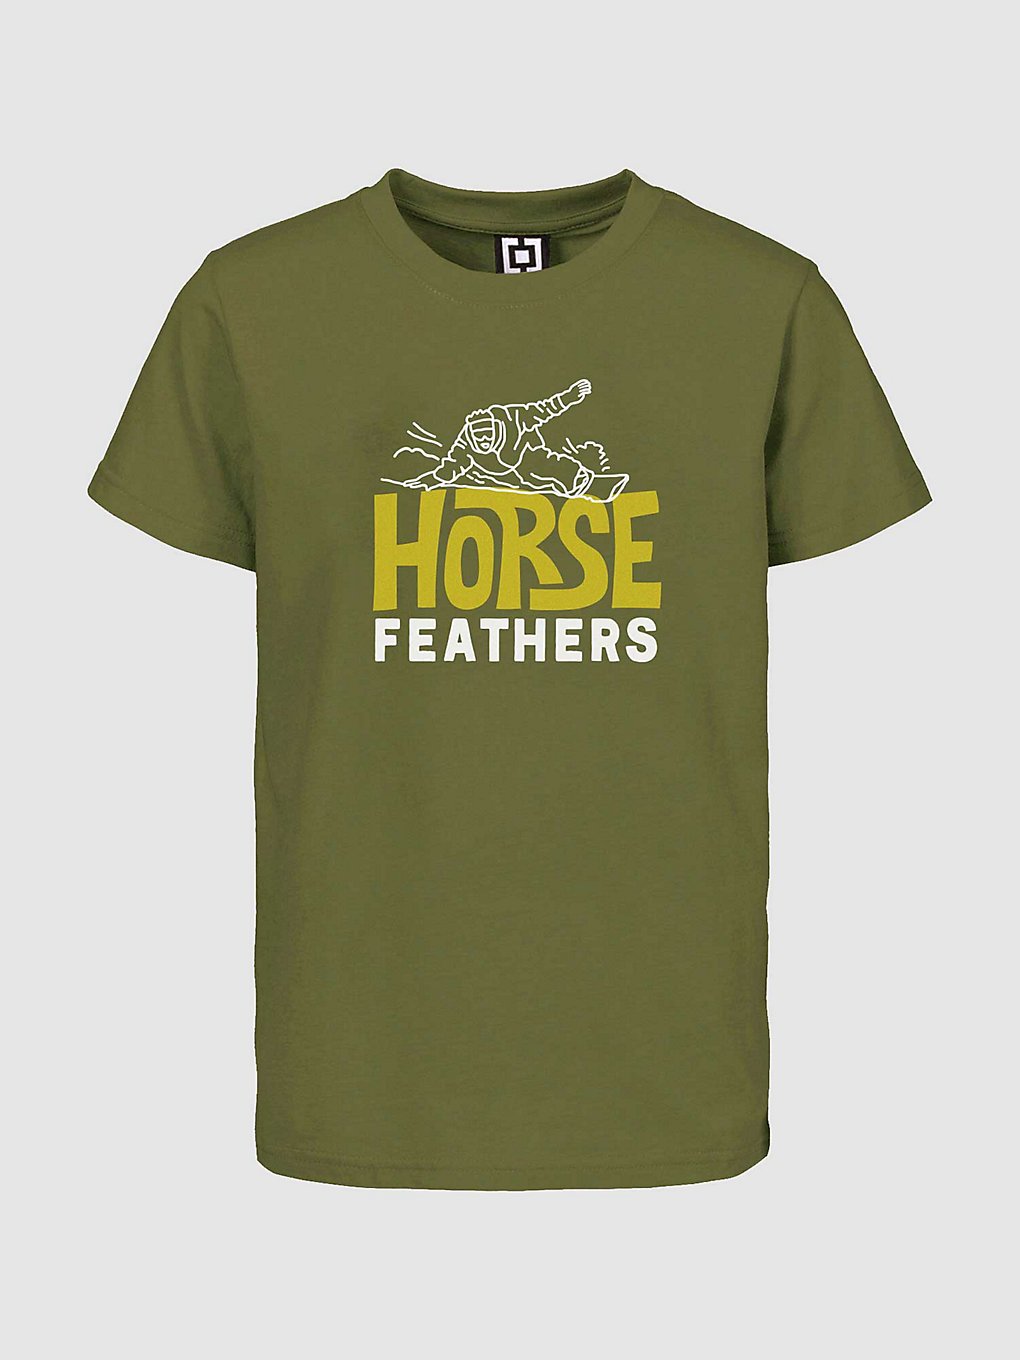 Horsefeathers Joyride T-Shirt lizard kaufen